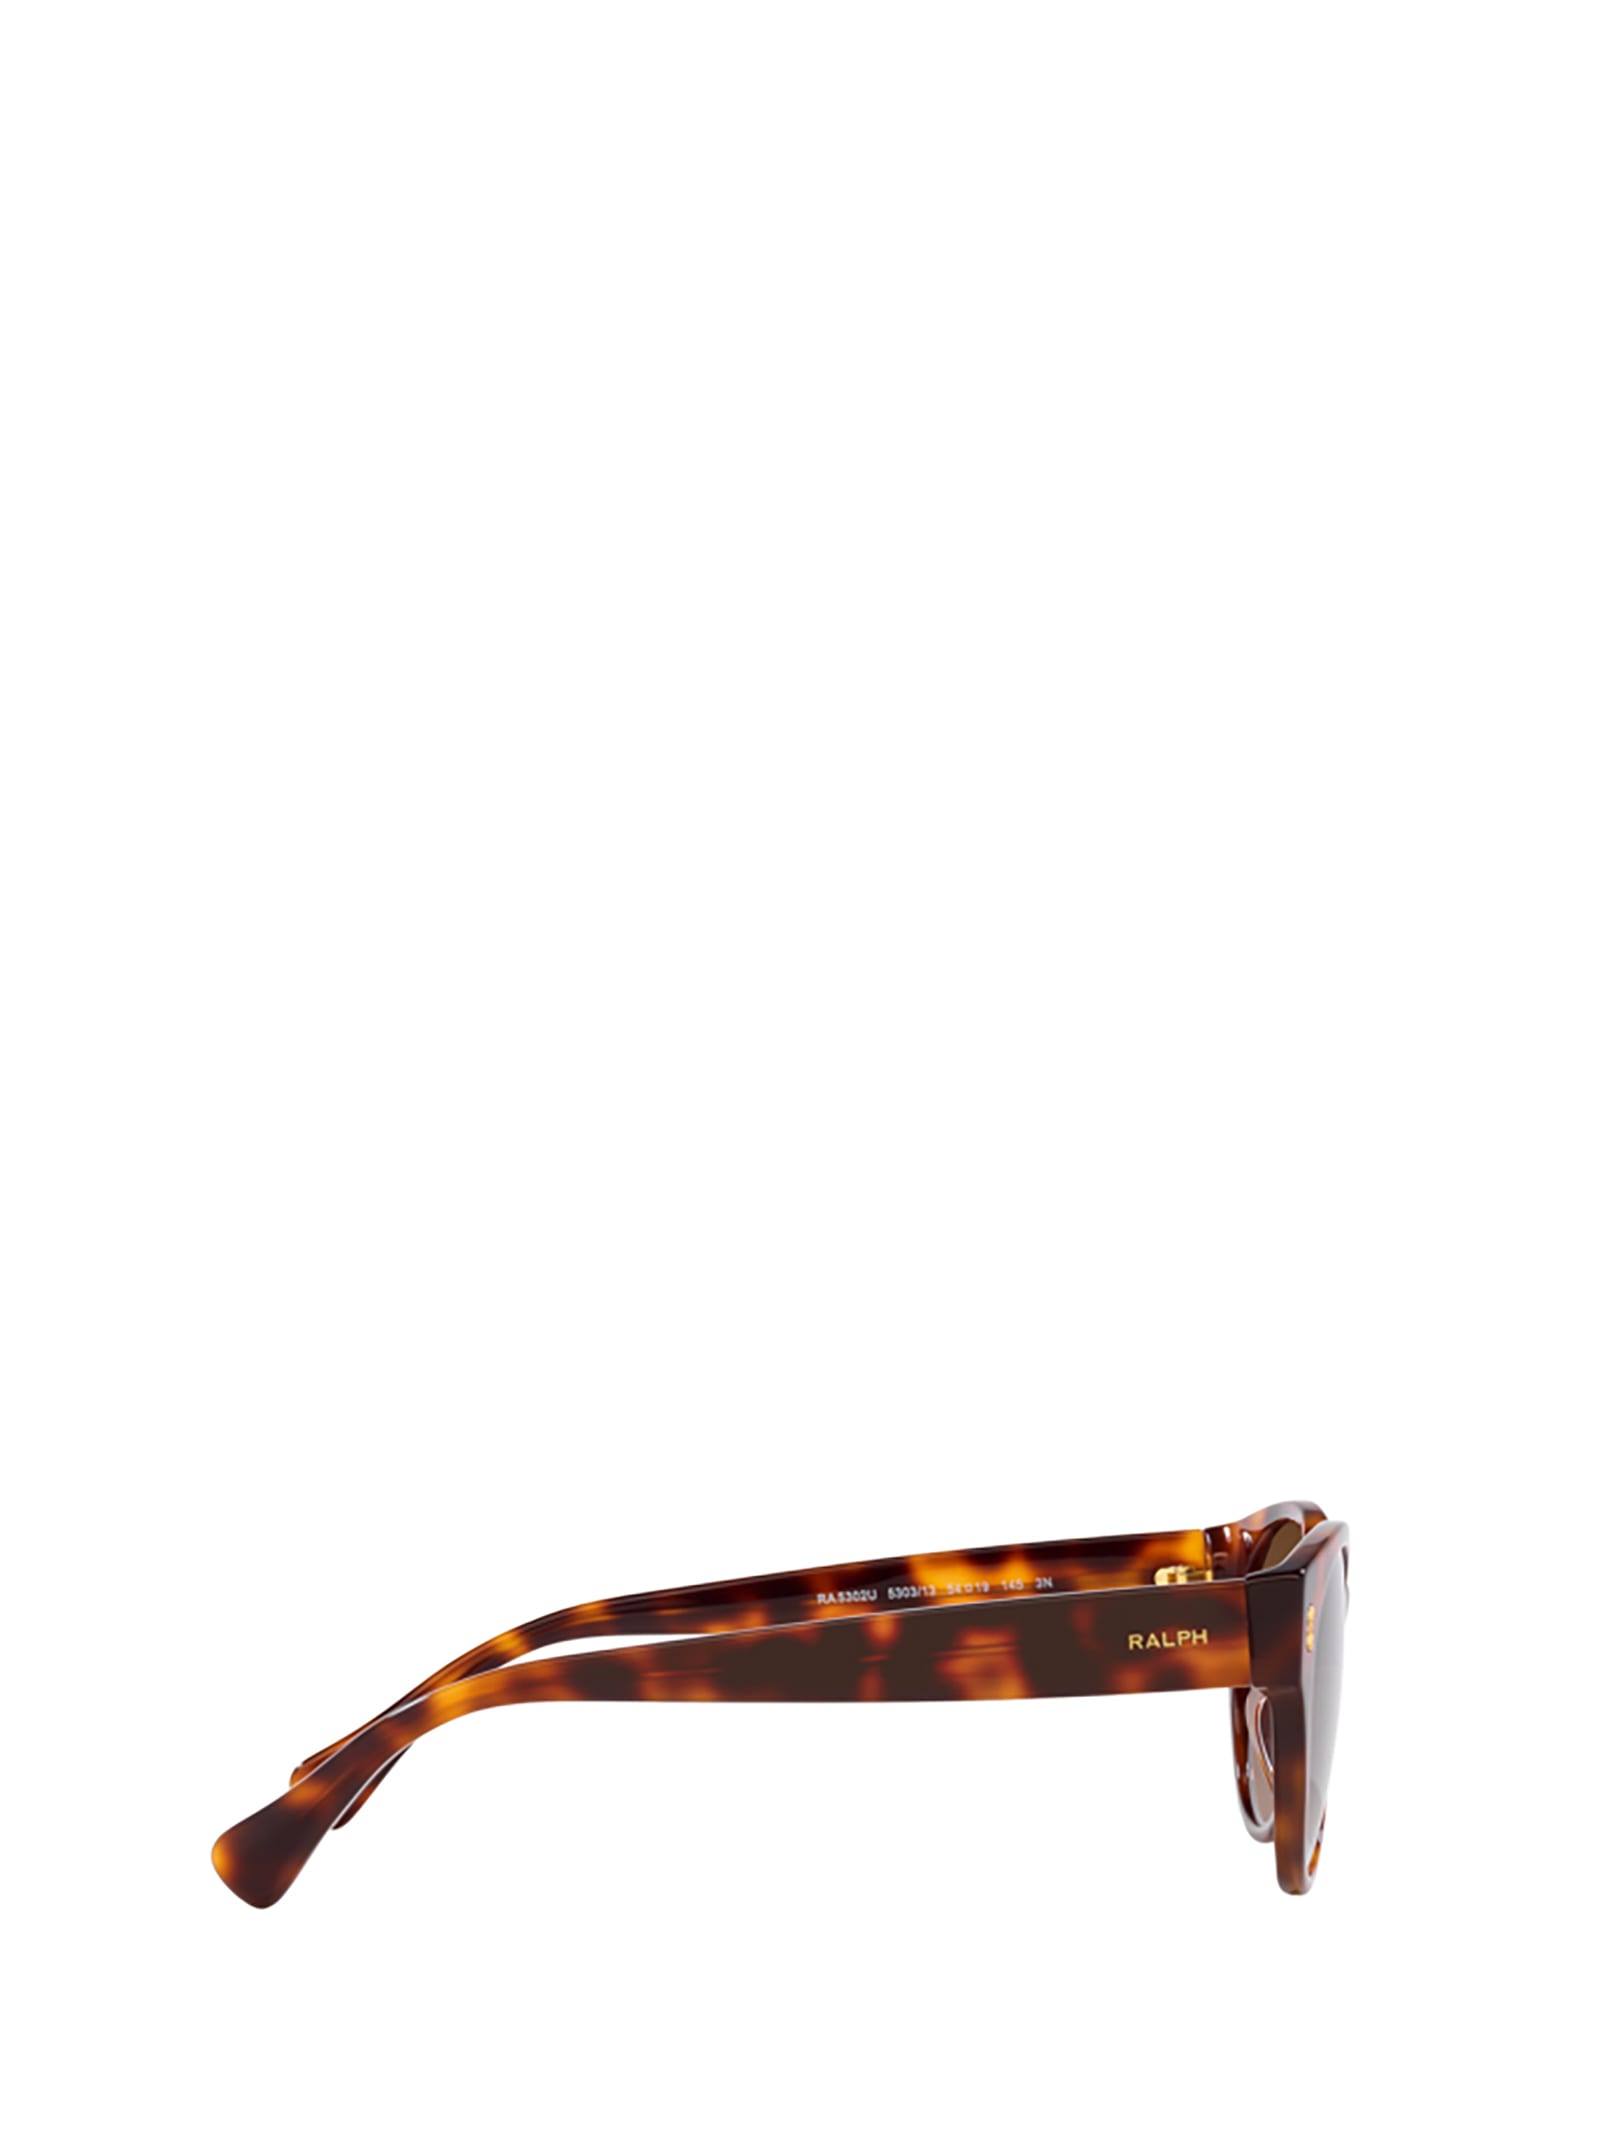 Shop Polo Ralph Lauren Ra5302u Shiny Havana Sunglasses